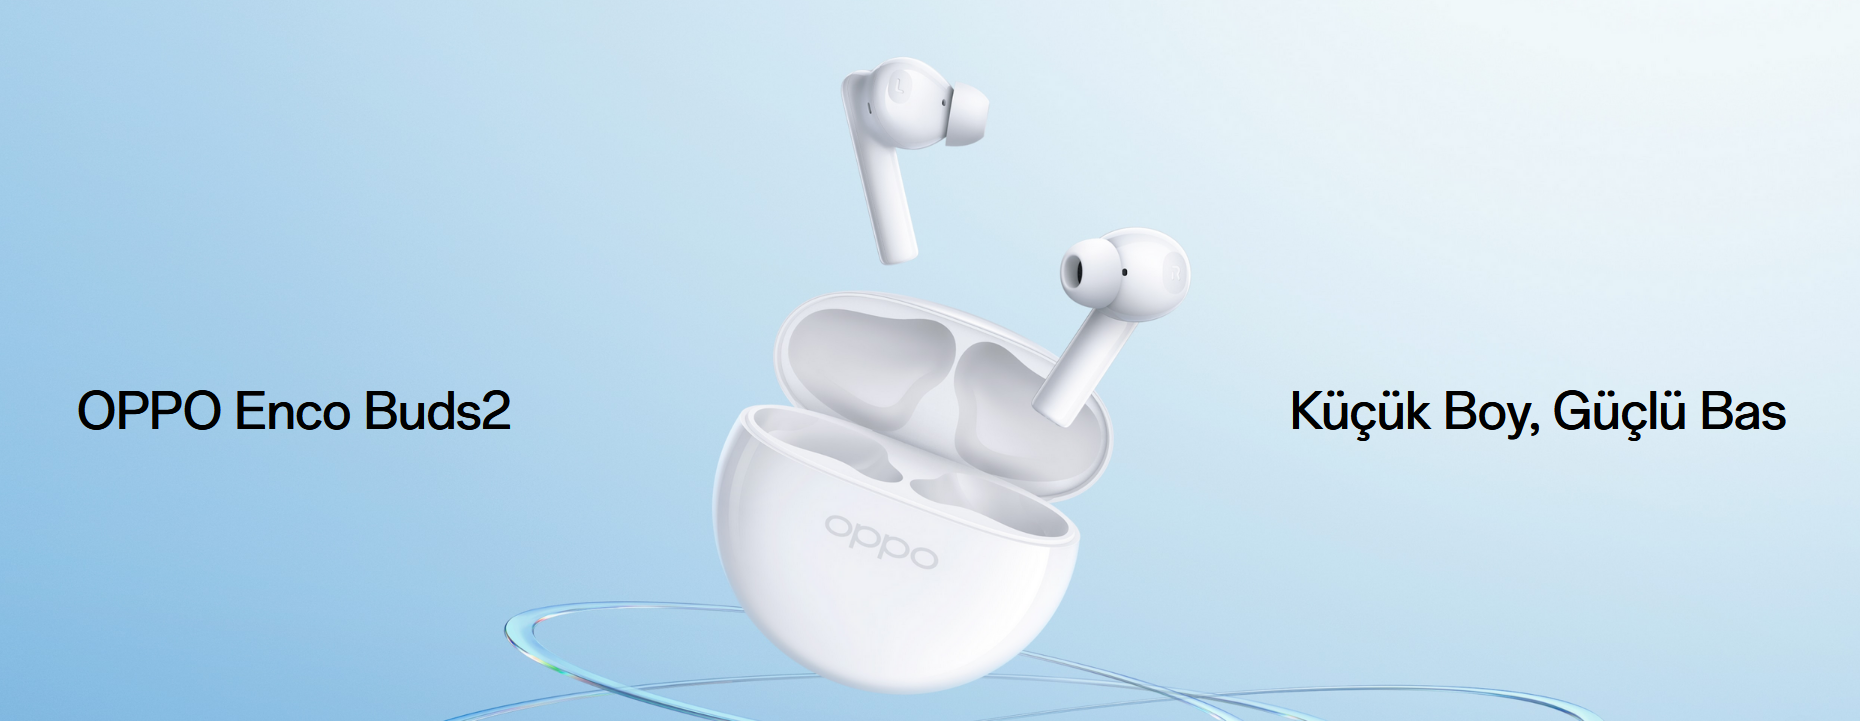 Oppo Enco Buds 2 Kablosuz Kulakiçi Bluetooth Kulaklık Beyaz